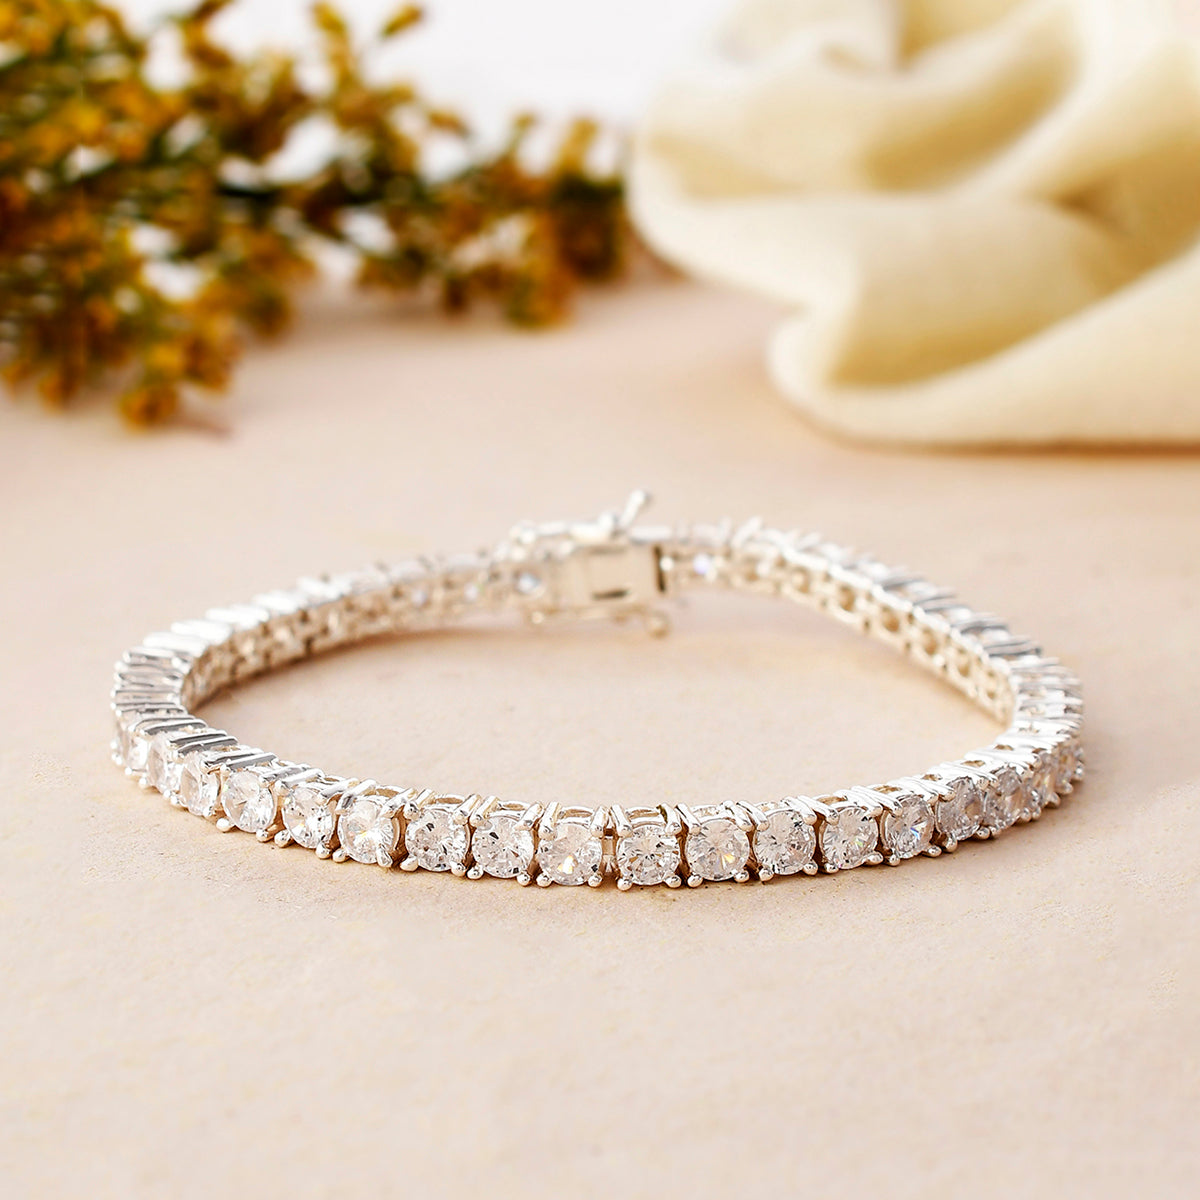 Women's Sparkling Elegance Cz Studded Silver Bracelet - Voylla